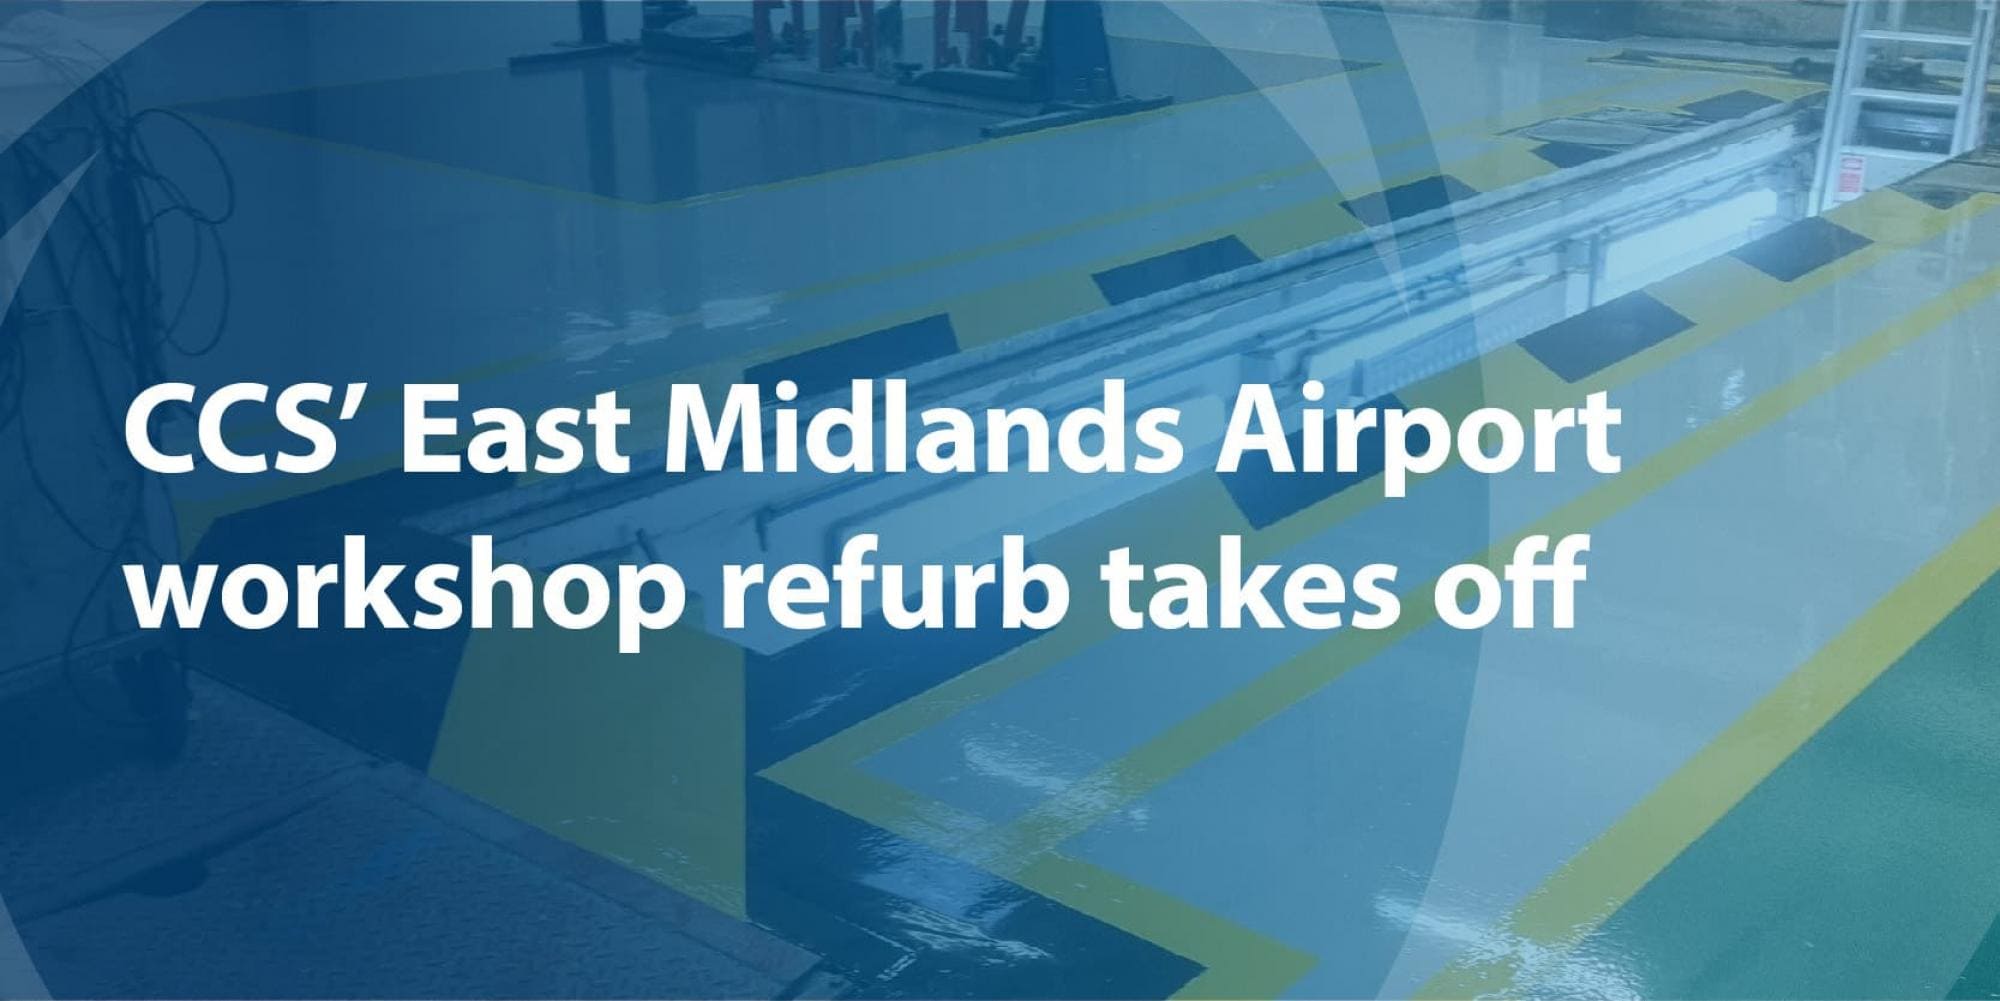 East Midlands Airport workshop refurb takes off! Workshop upgrades by CCS Garage Equipment 